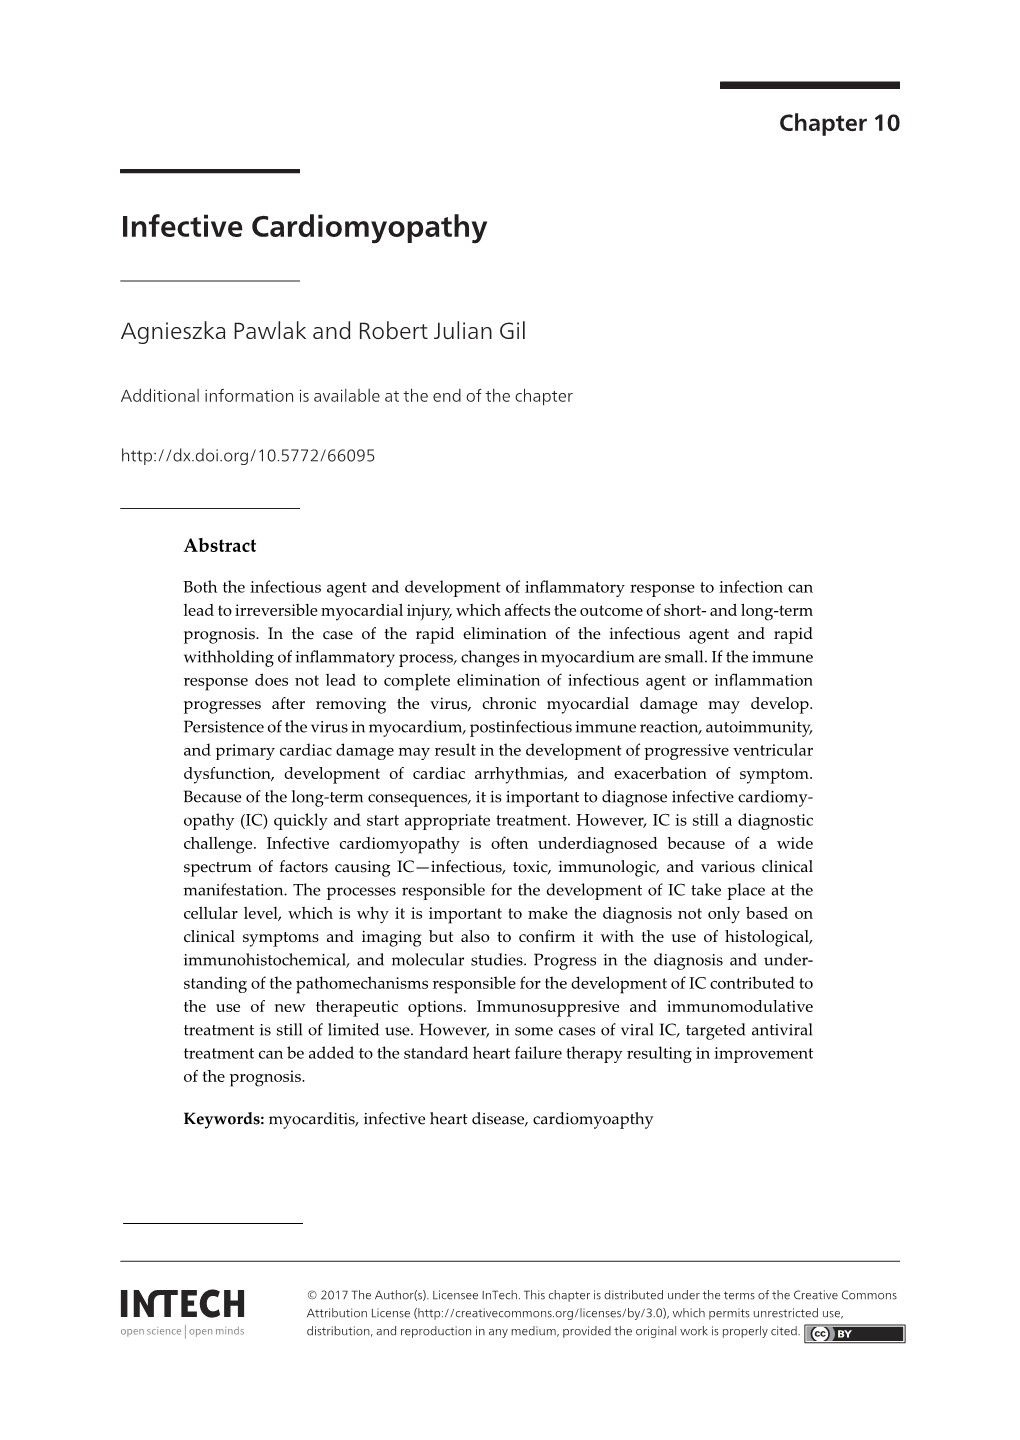 Infective Cardiomyopathy” Infective Cardiomyopathy